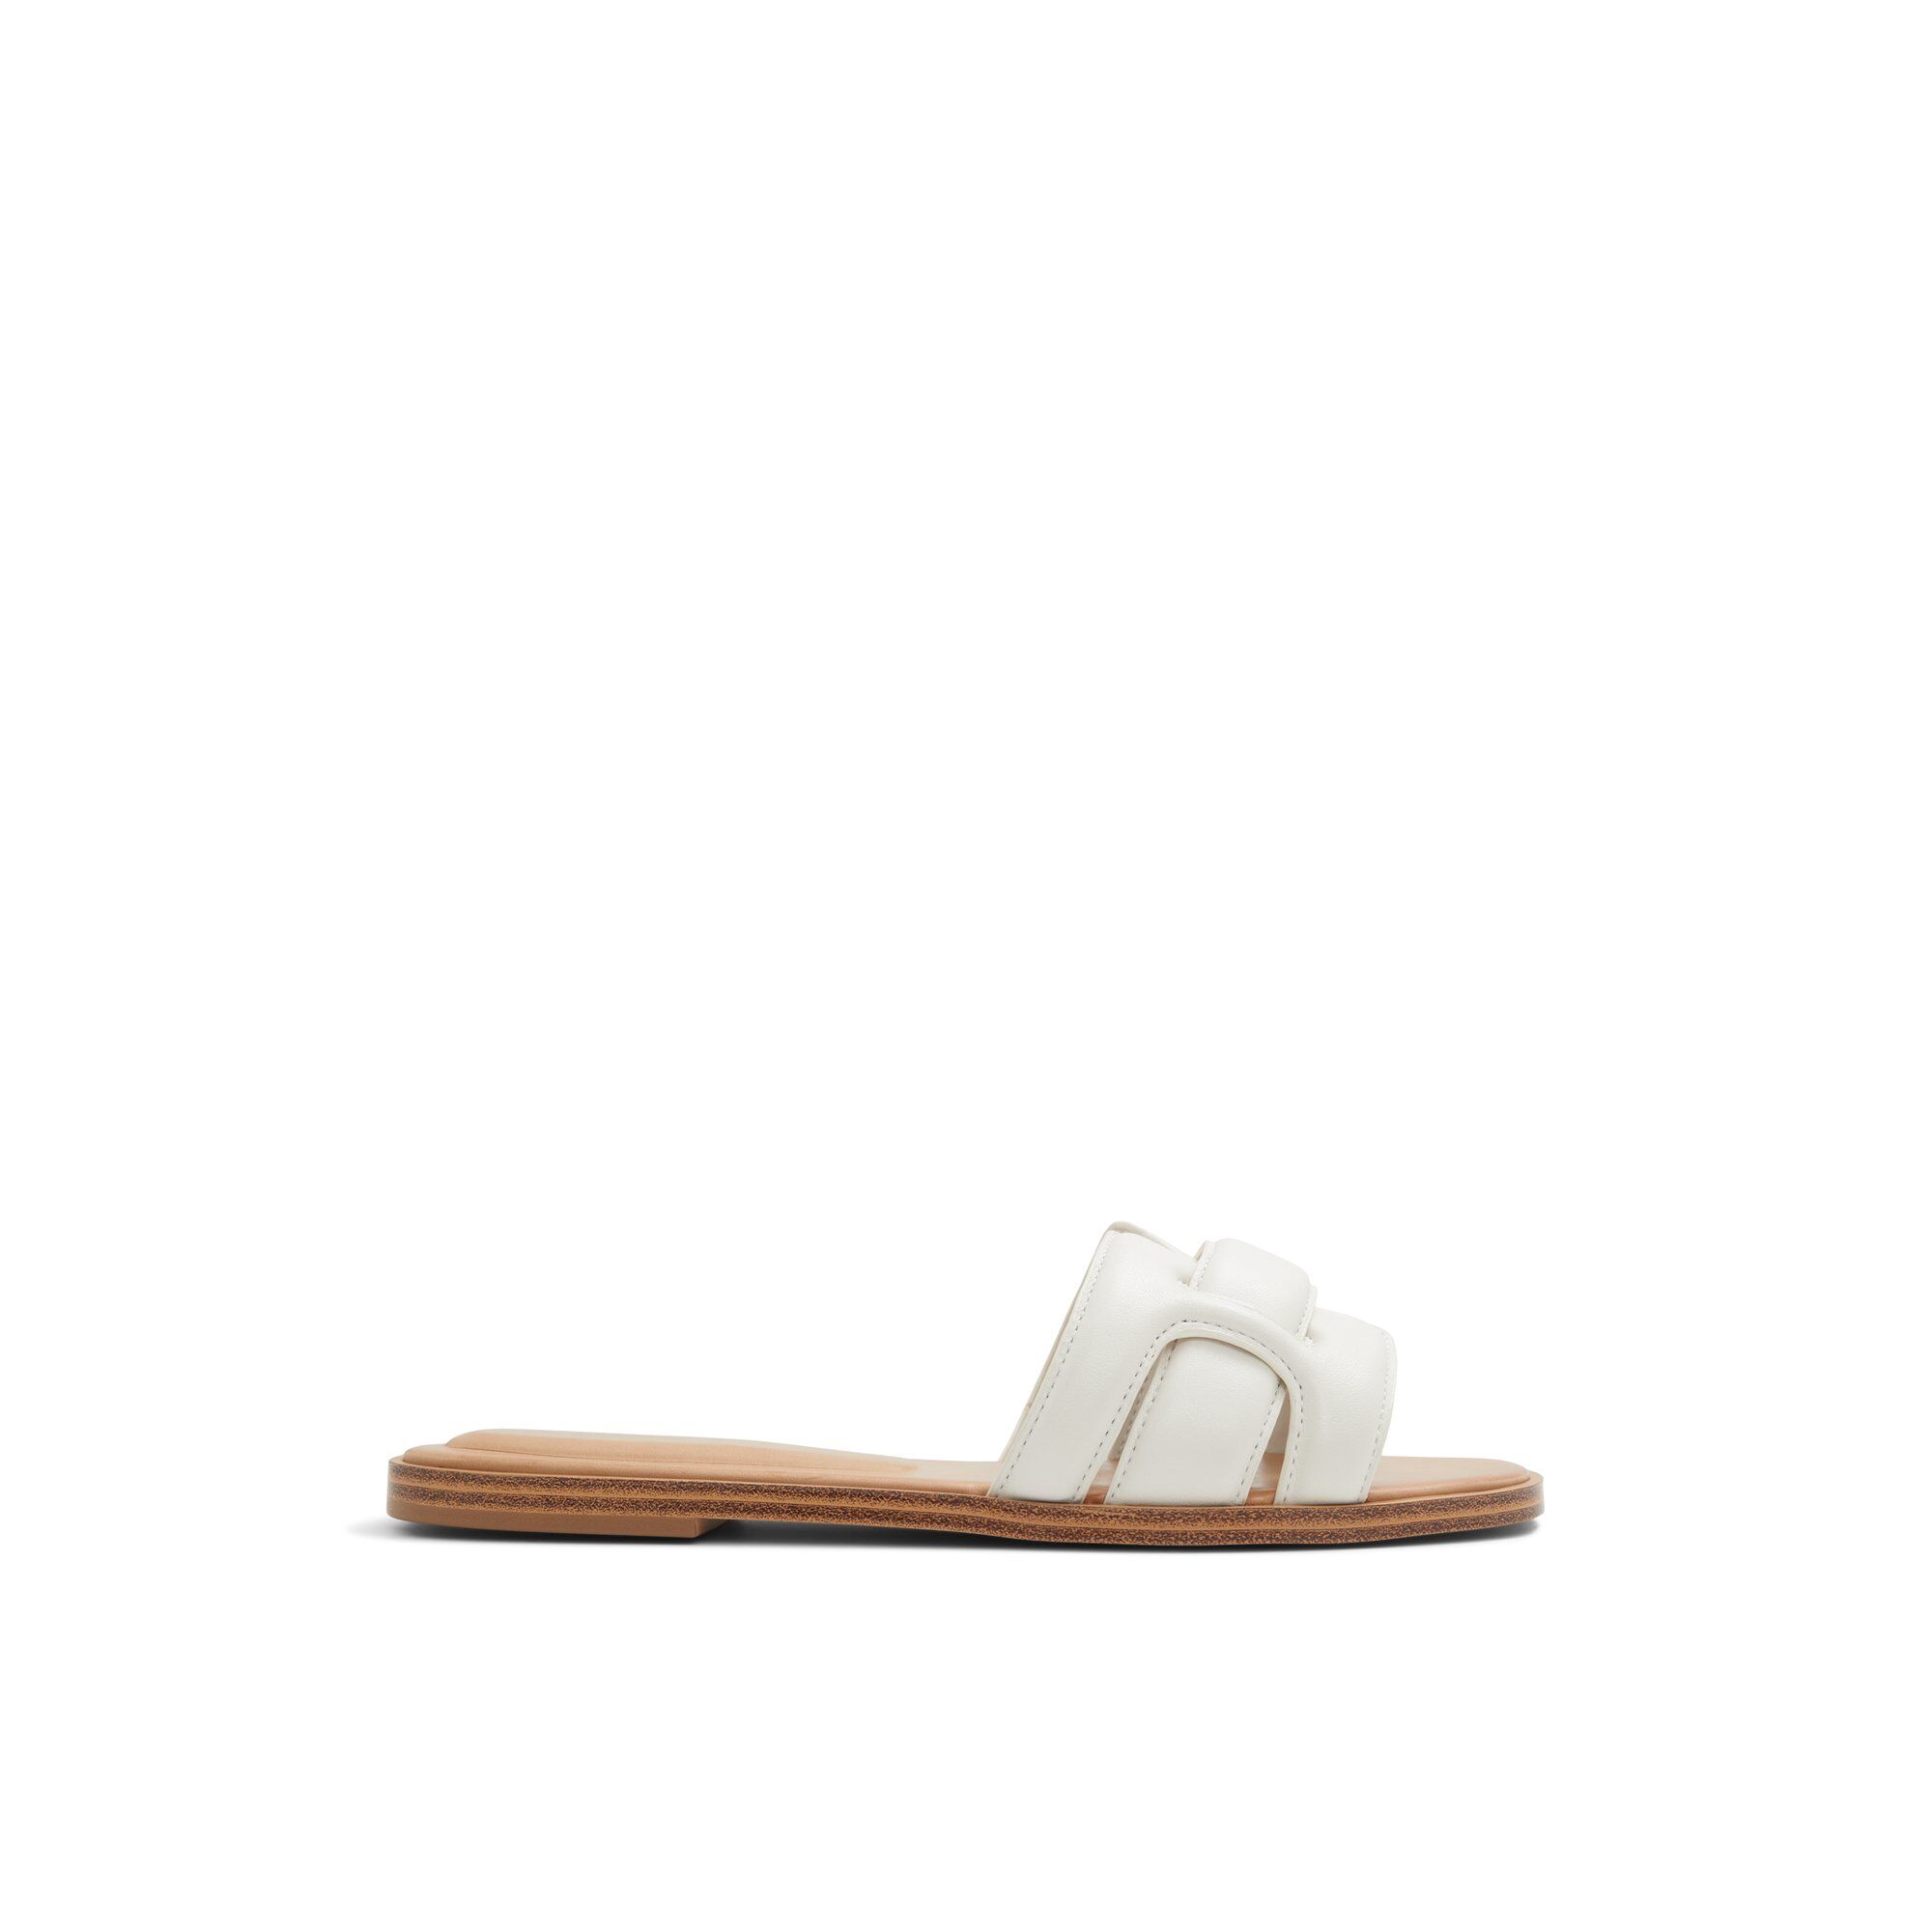 ALDO Elenaa - Women's Flat Sandals - White, Size 7